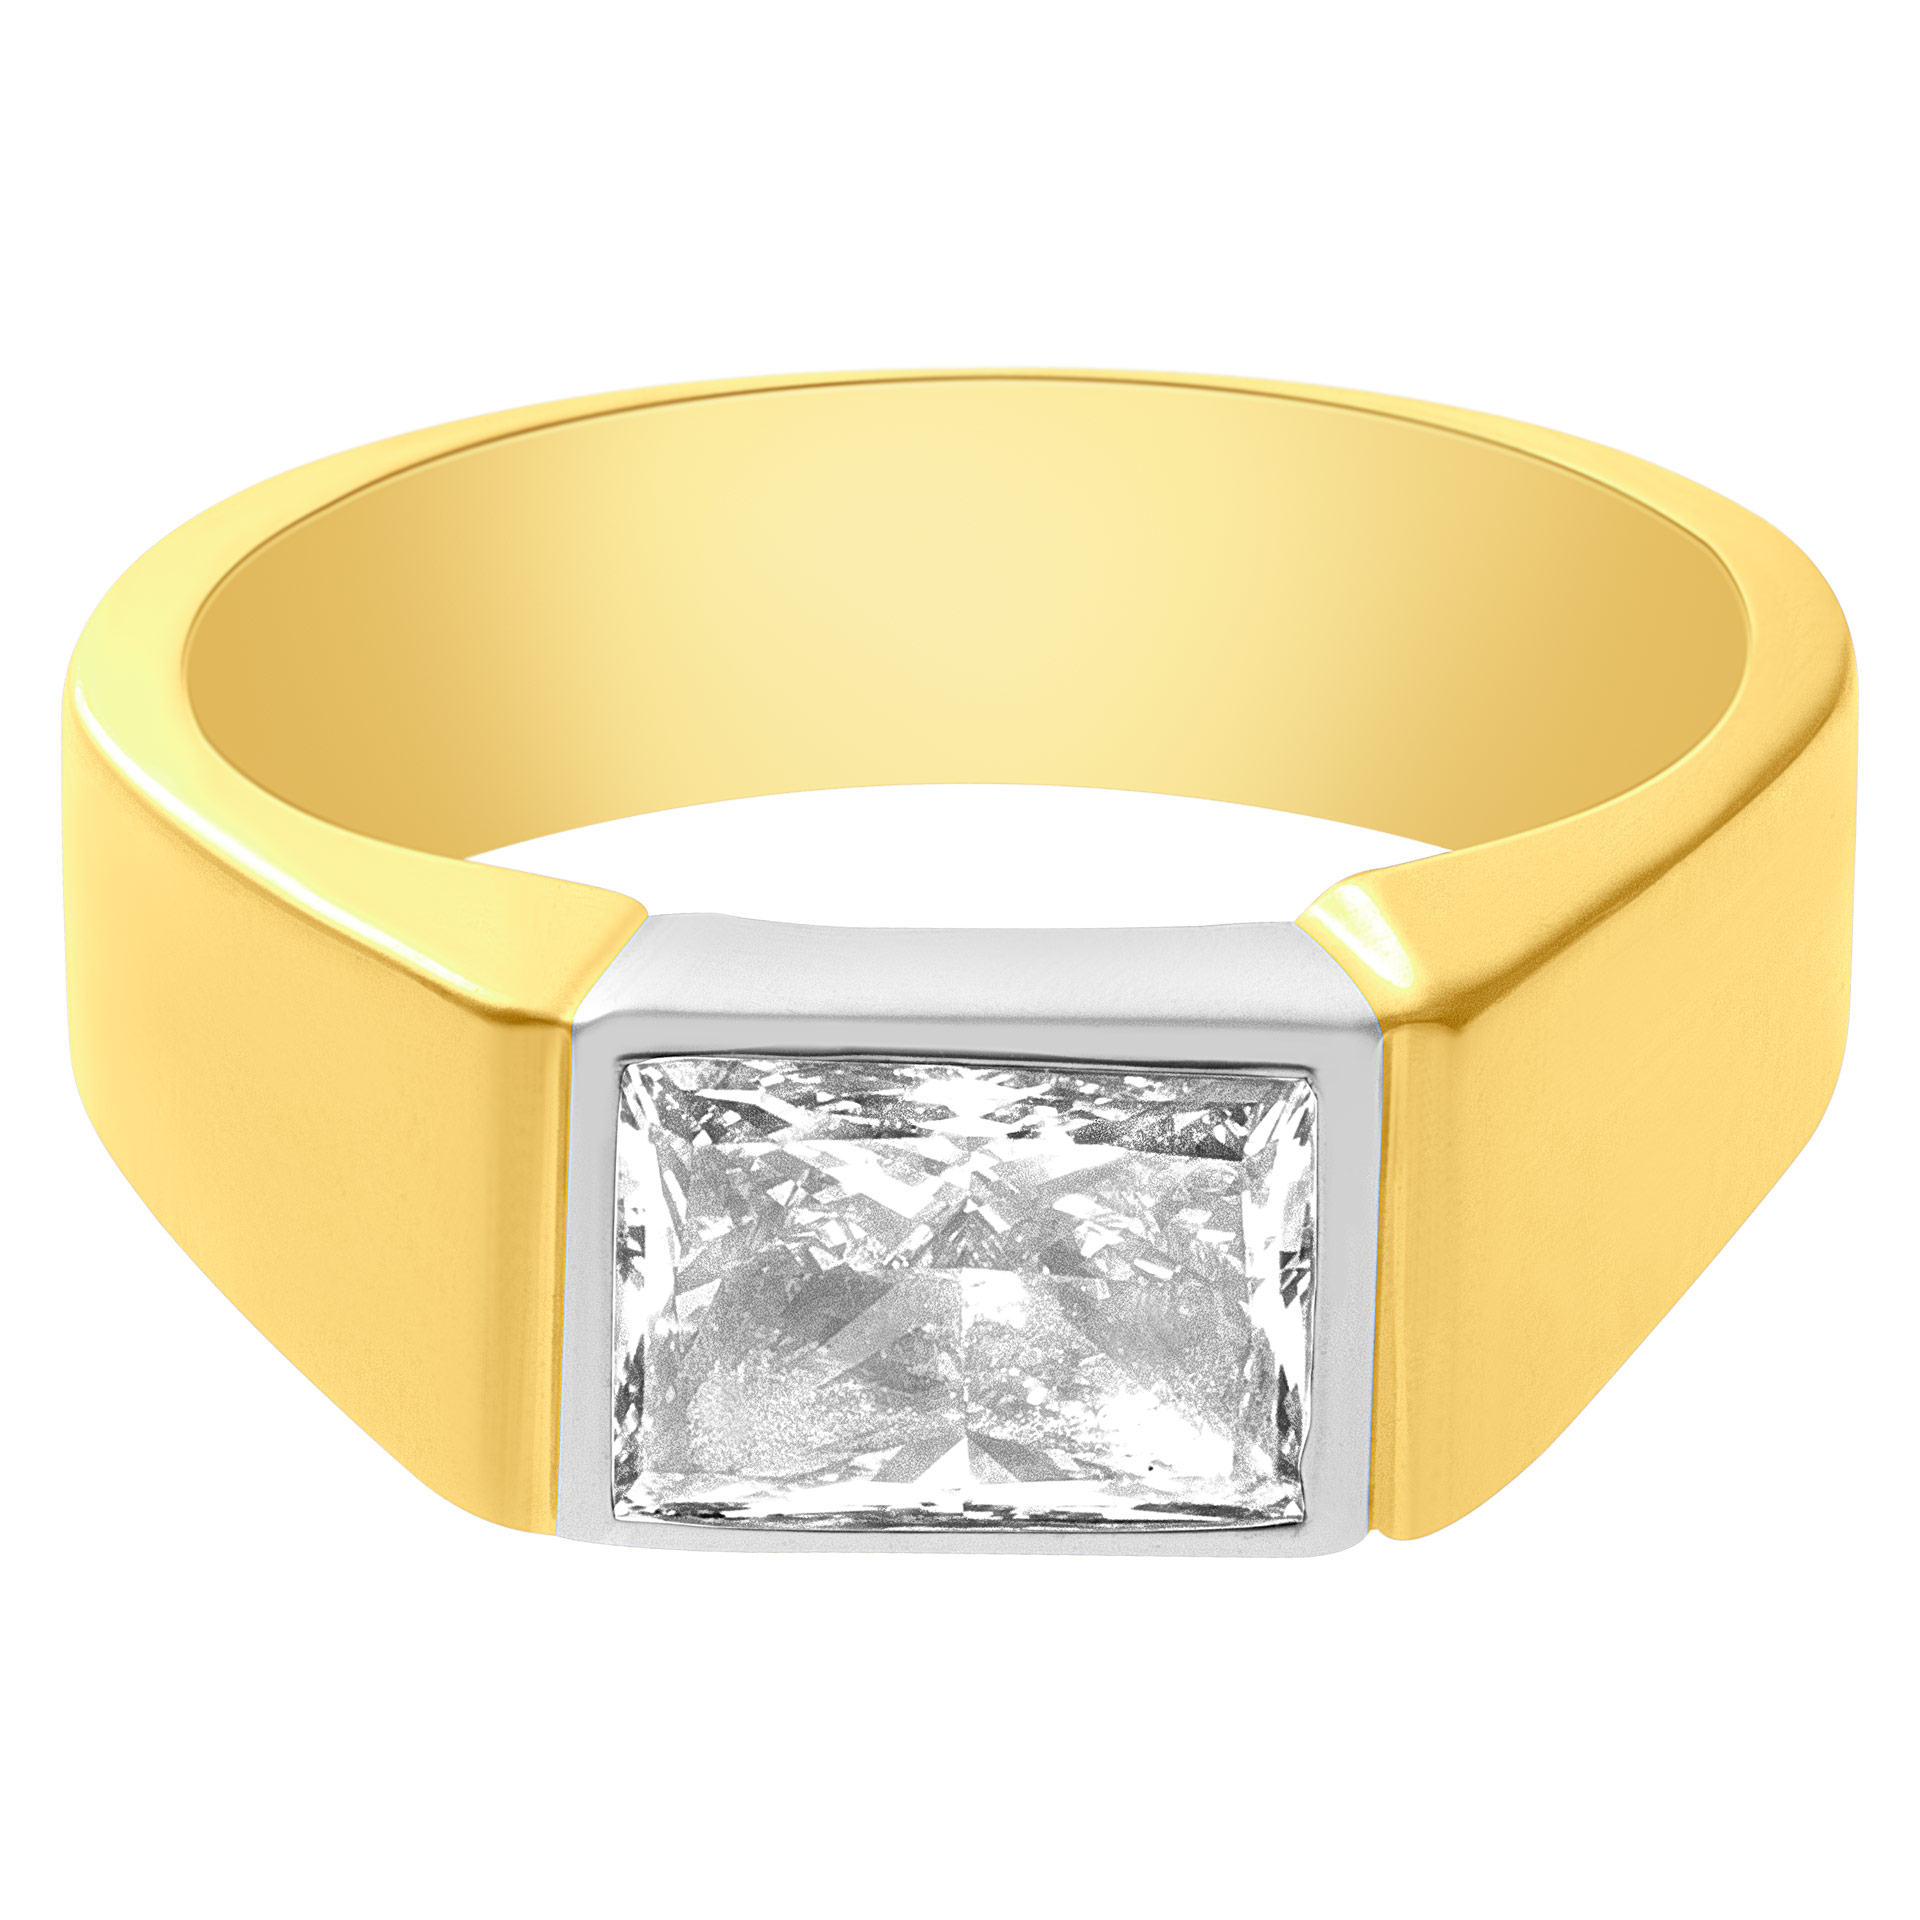 GIA certified Rectangular Modified Brilliant cut diamond 2.06 ct (L color, VS1 clarity) ring in 18k